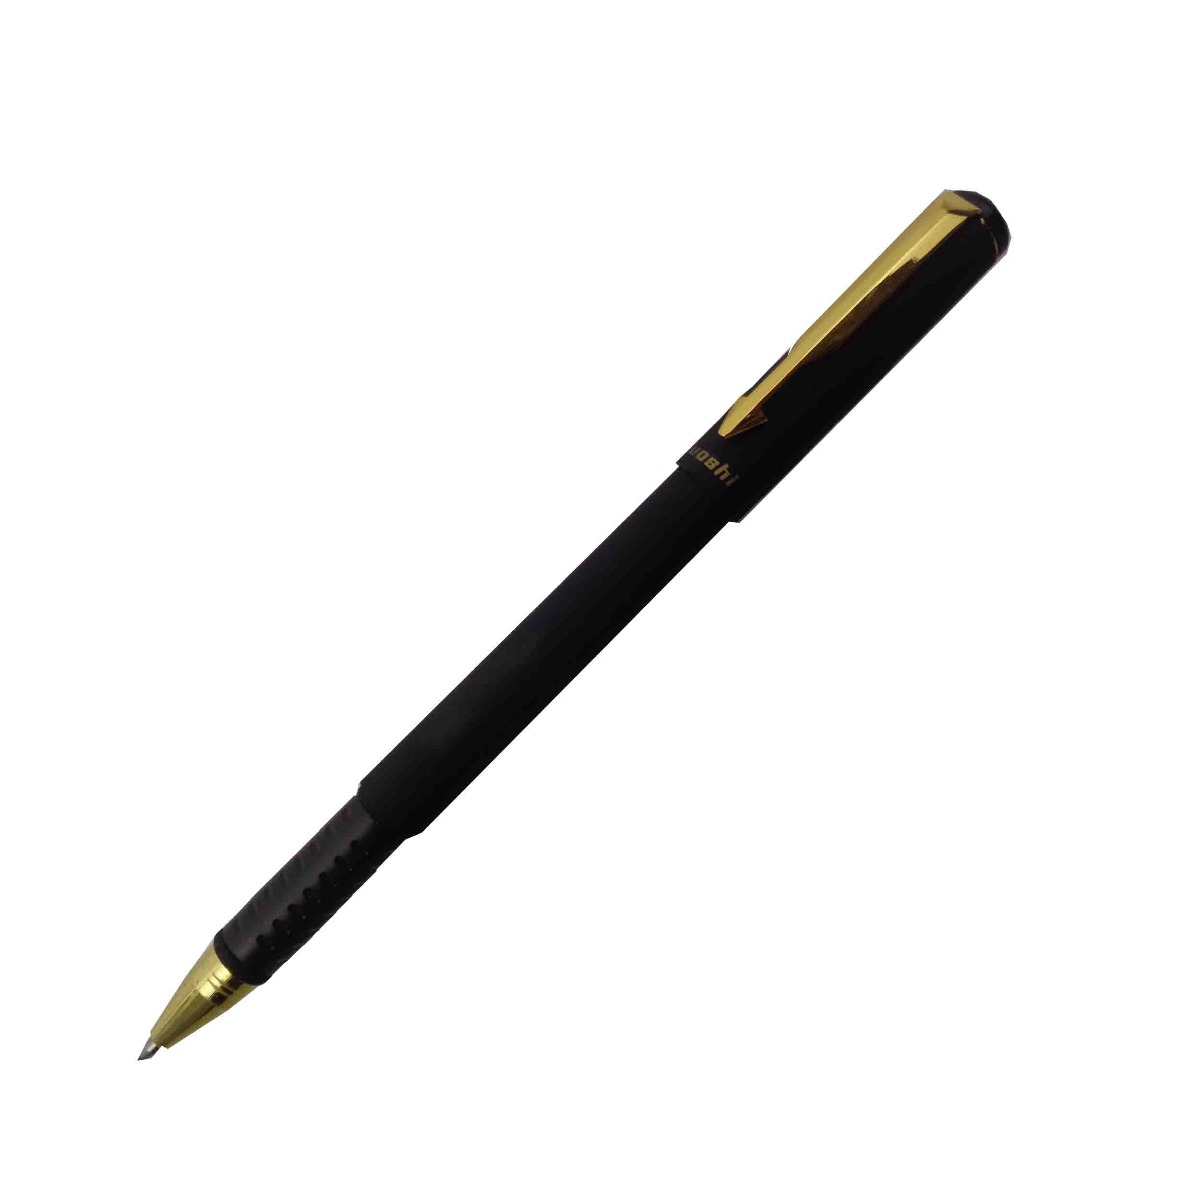 Luoshi GP2073A Model: 15524 Black color body with golden clip 0.7mm tip Blue ink cap type gel pen